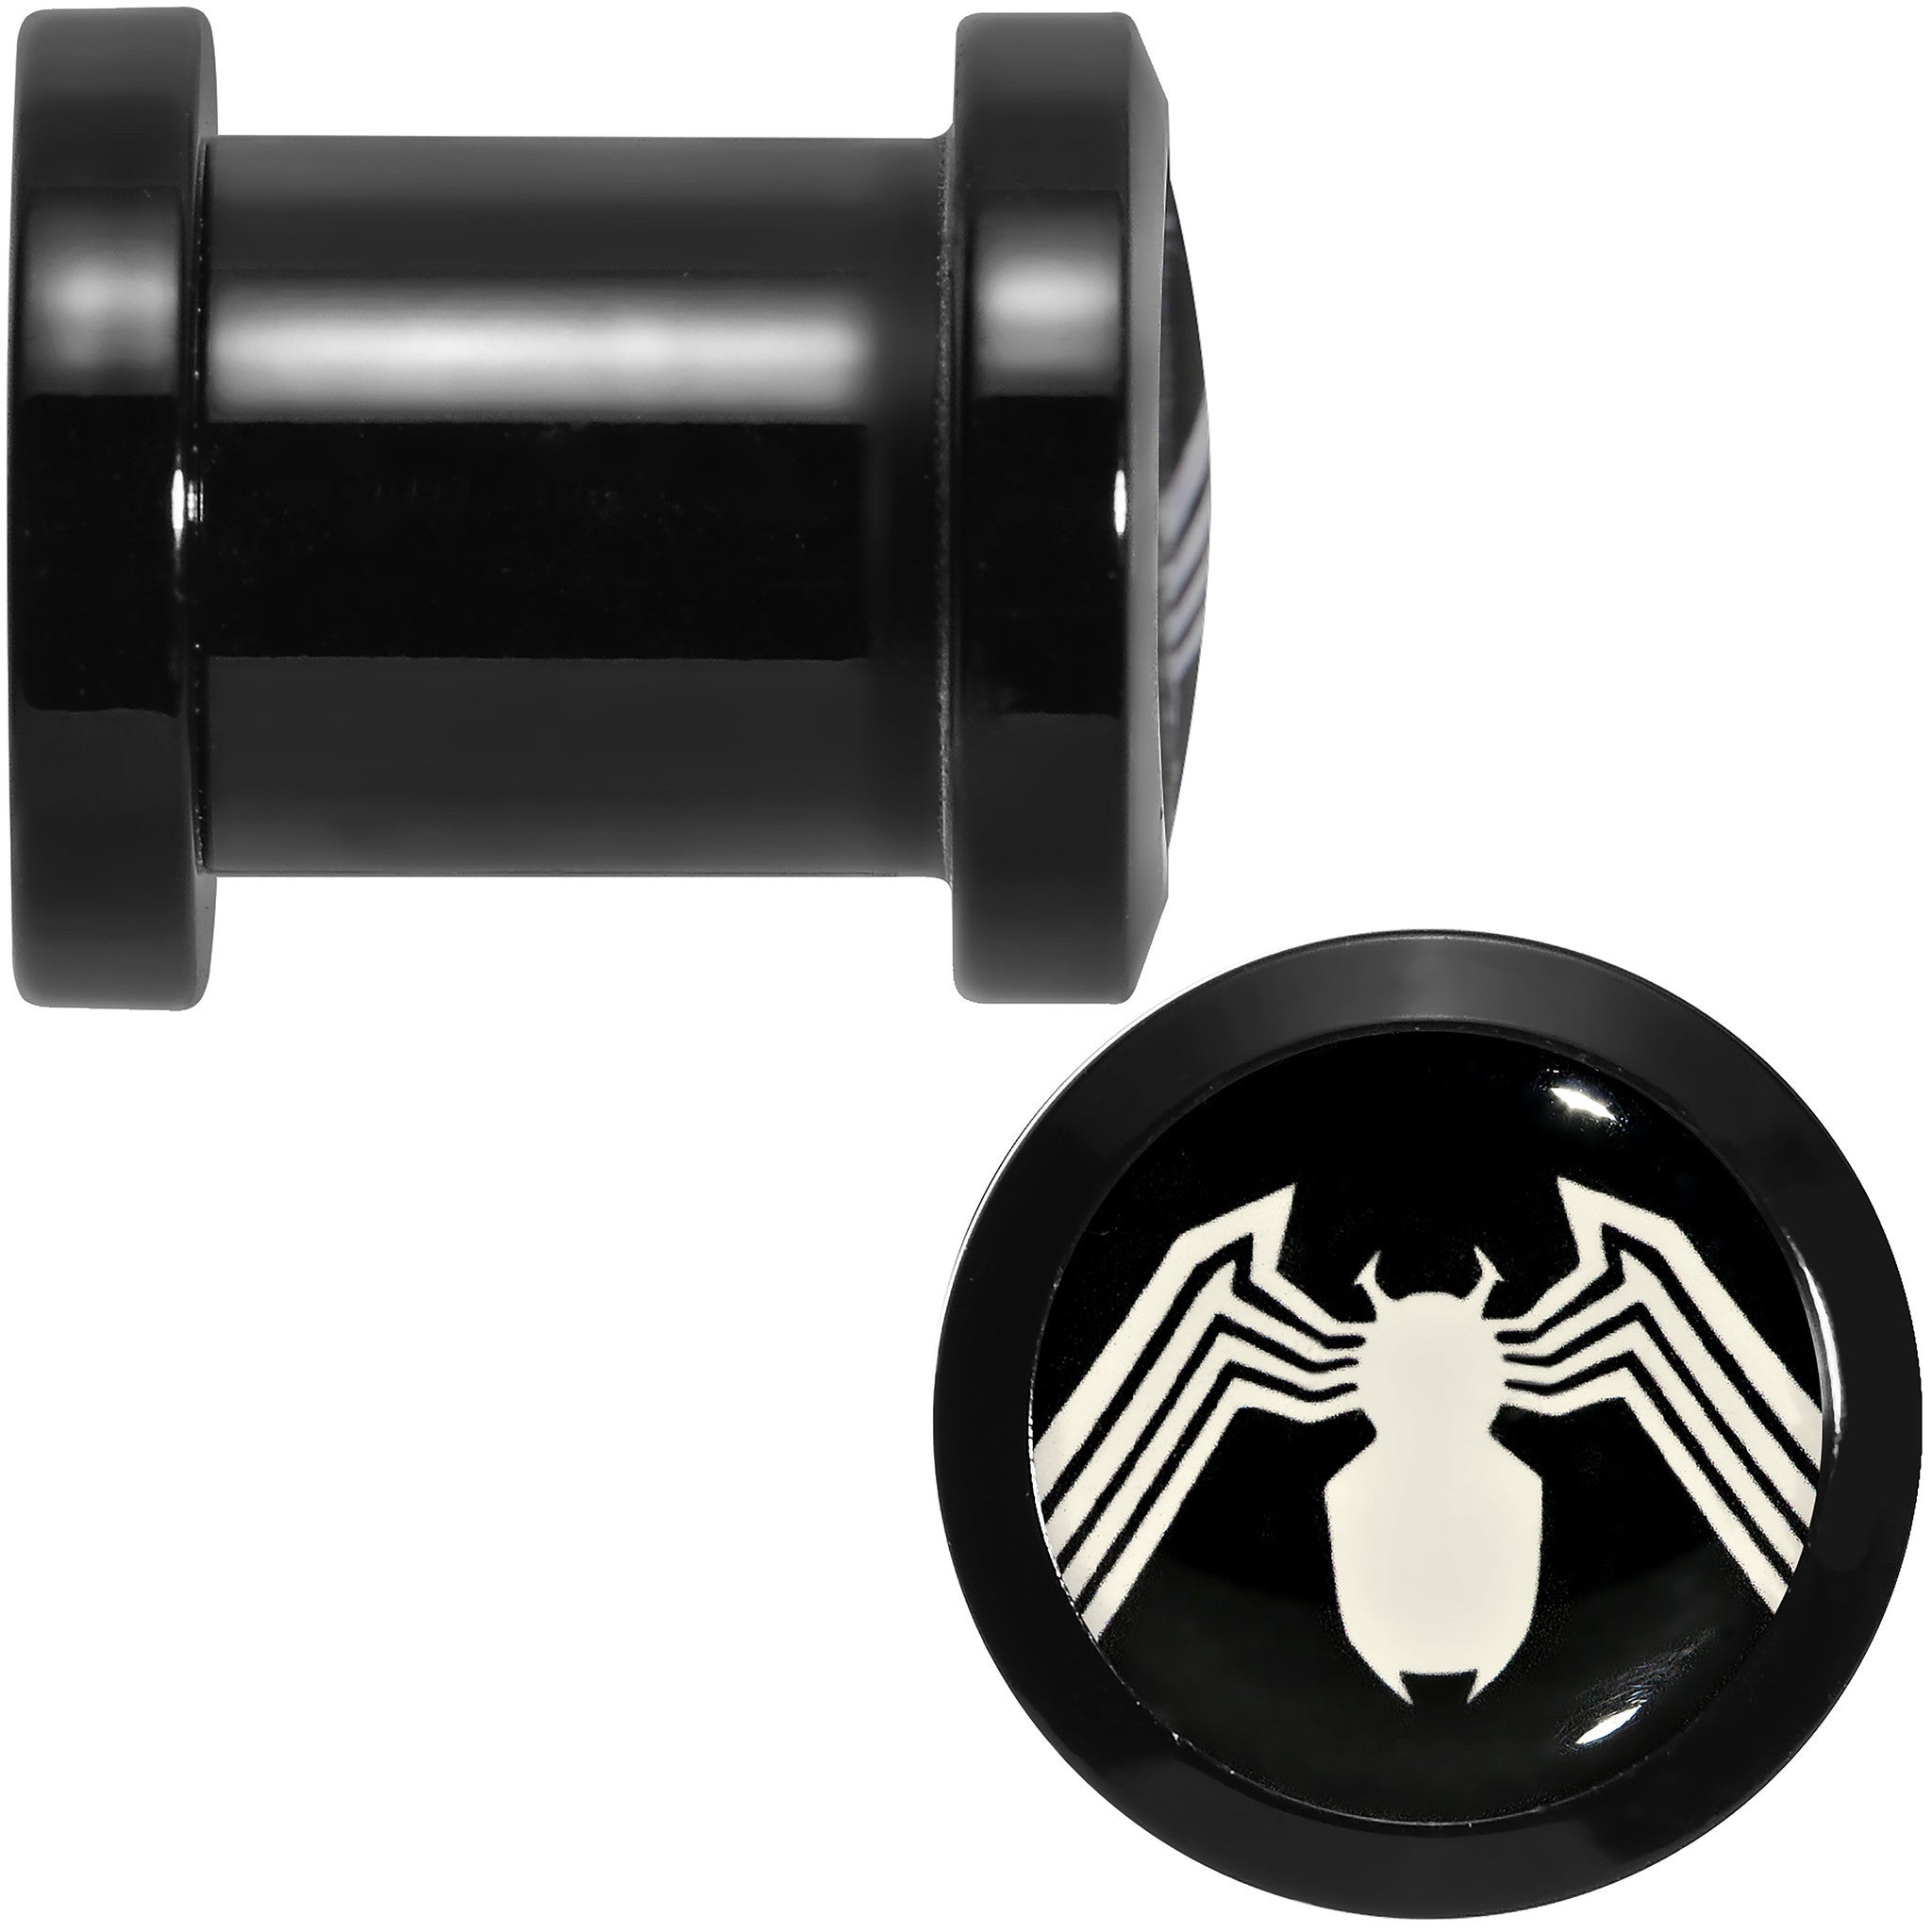 0 Gauge Licensed White Spider-Man Logo Black PVD Screw Fit Plugs Set